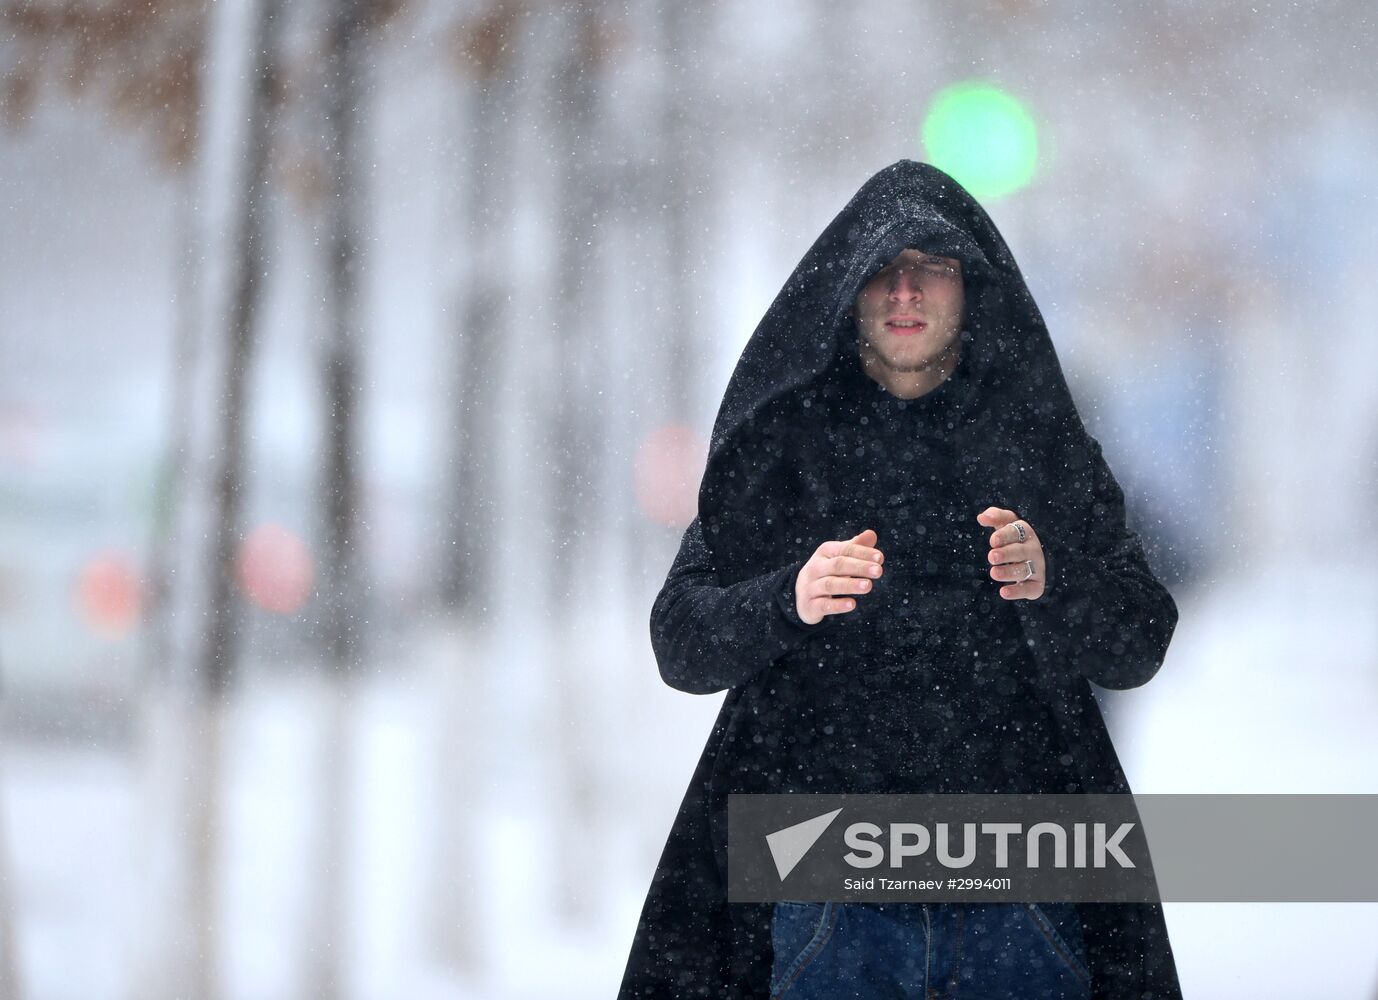 Winter in Grozny